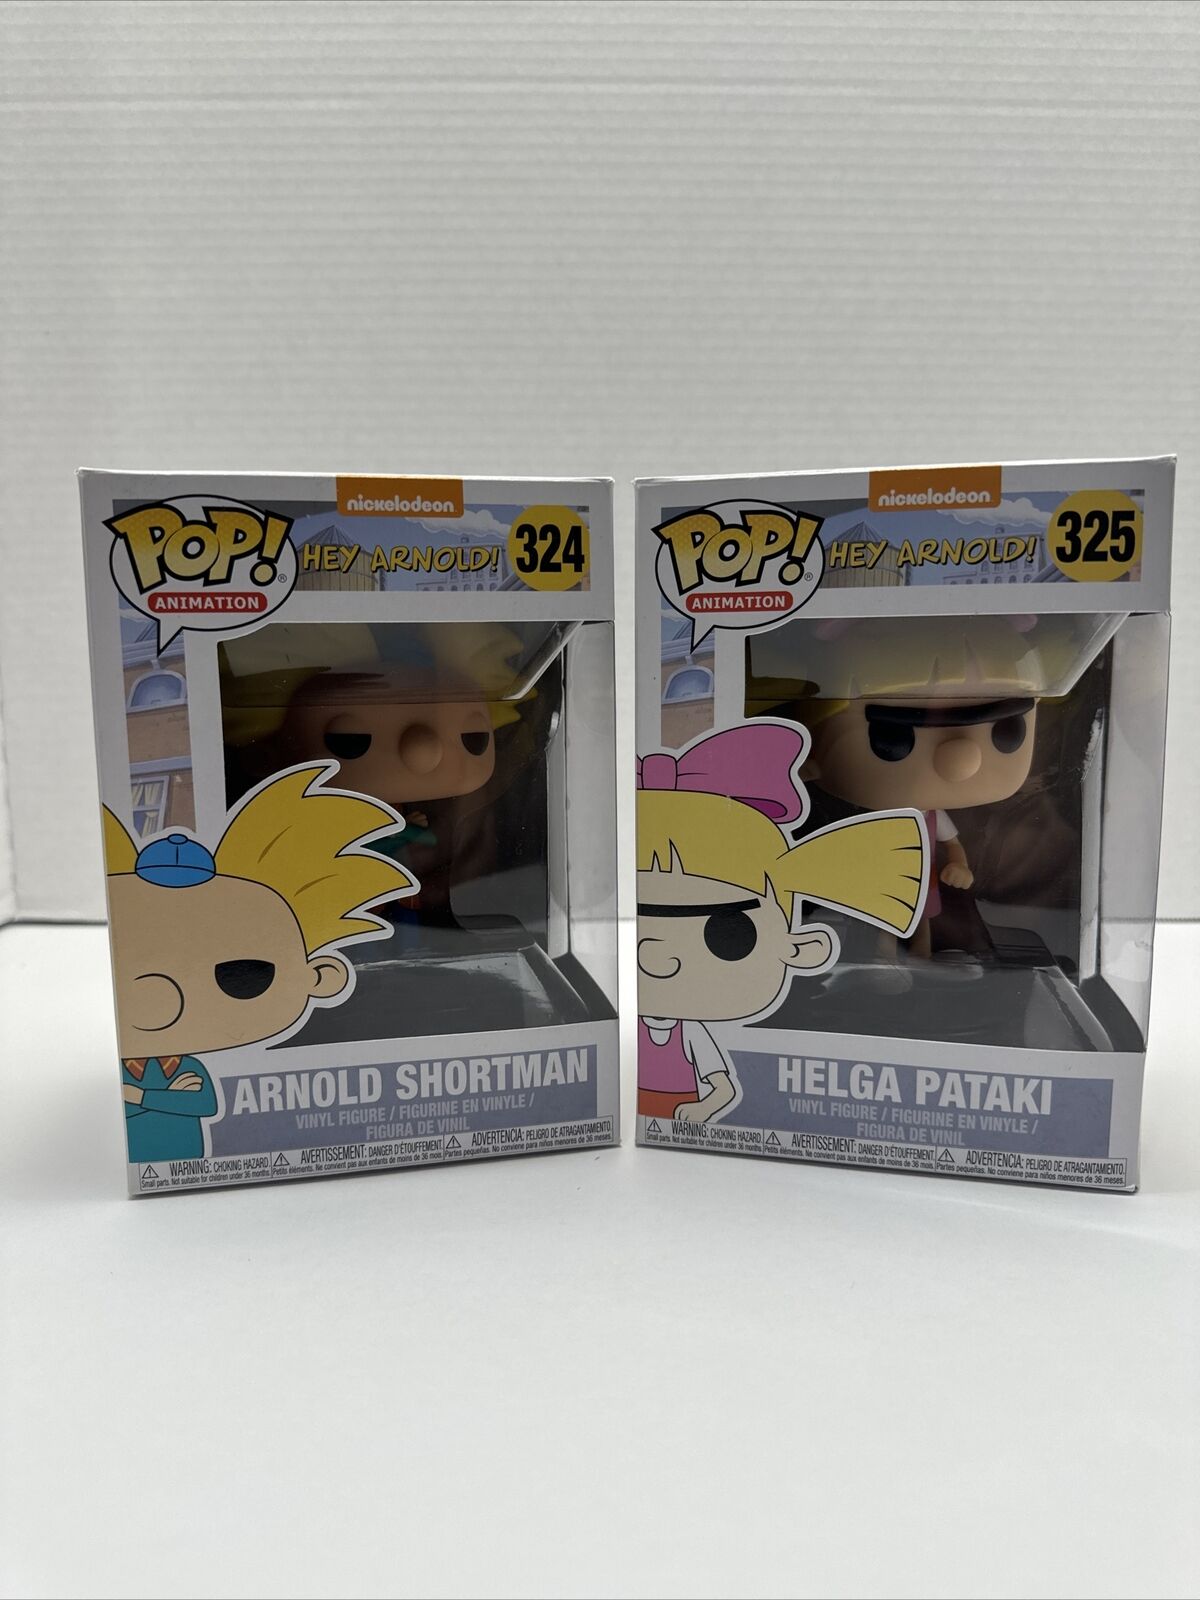 Nickelodeon Hey Arnold Pop Figures- Arnold and Helga